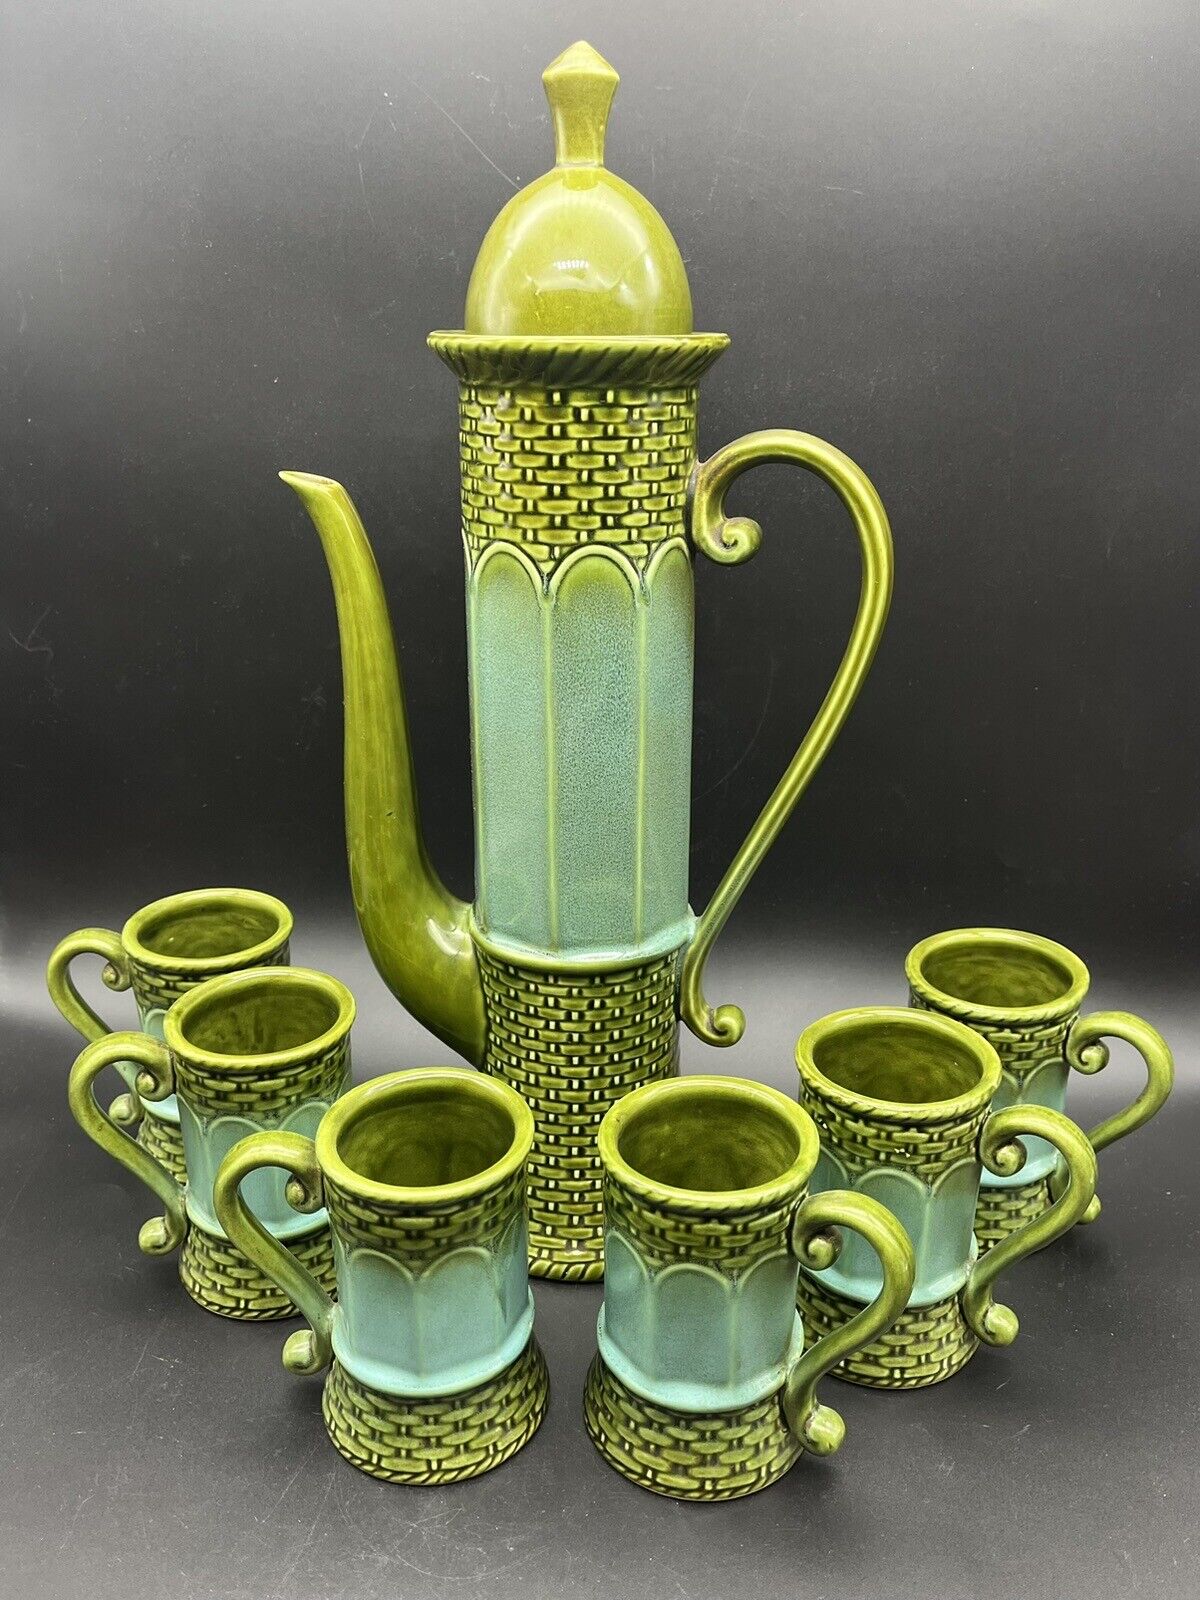 Vintage Japan Ceramic Medieval Castle Keep Tea Pot & 6 Mugs Cups Chartreuse Teal